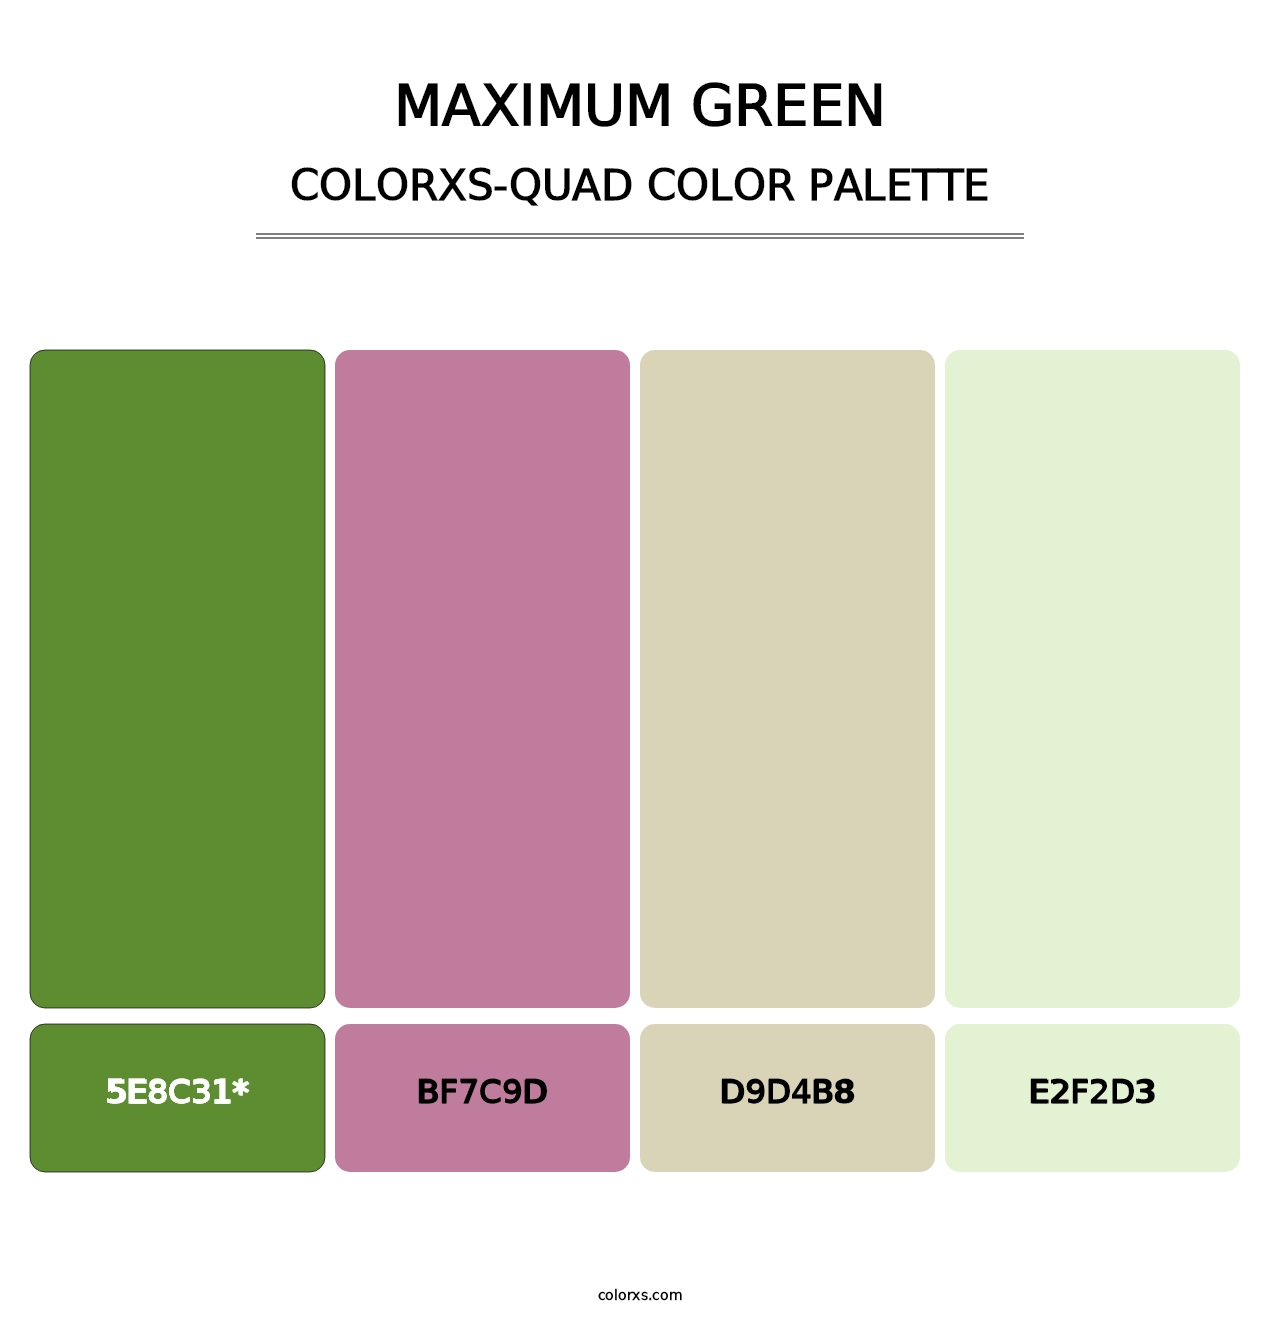 Maximum Green - Colorxs Quad Palette